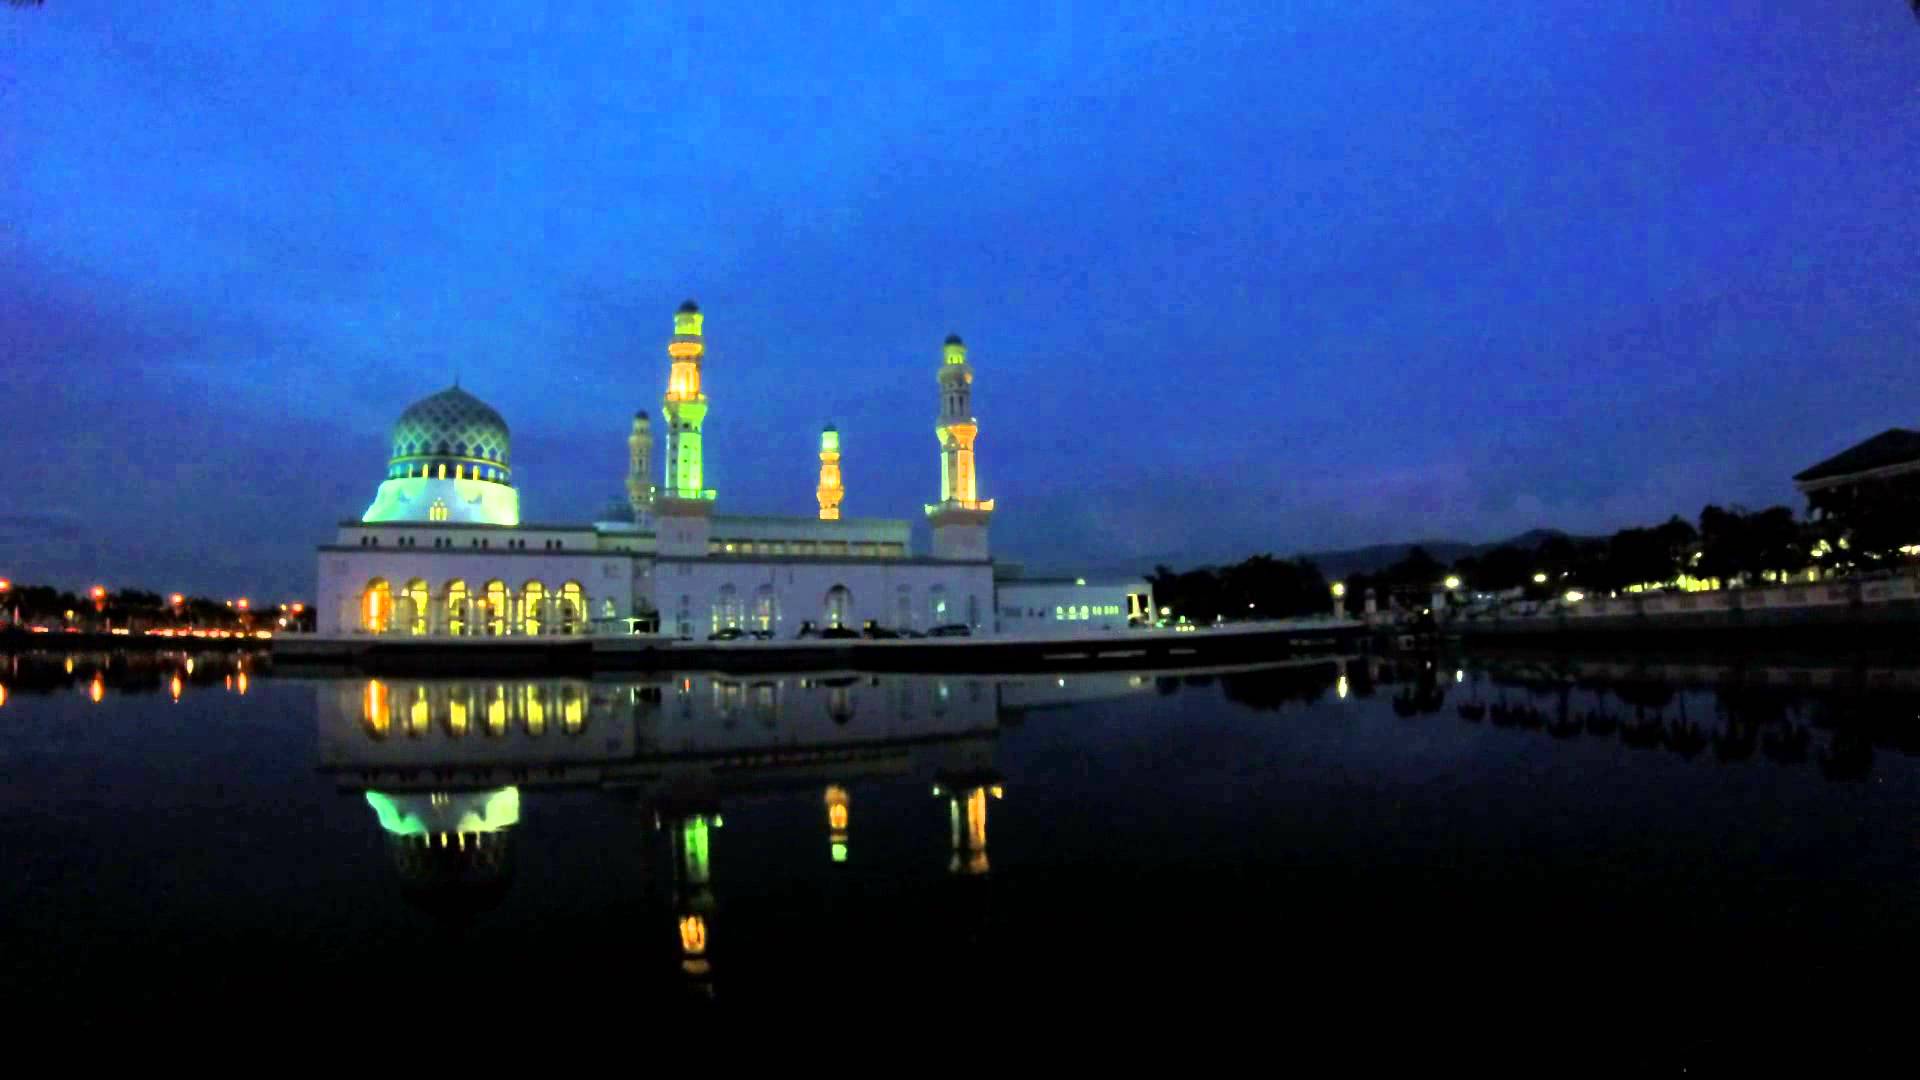 Kota Kinabalu City Mosque Backgrounds on Wallpapers Vista